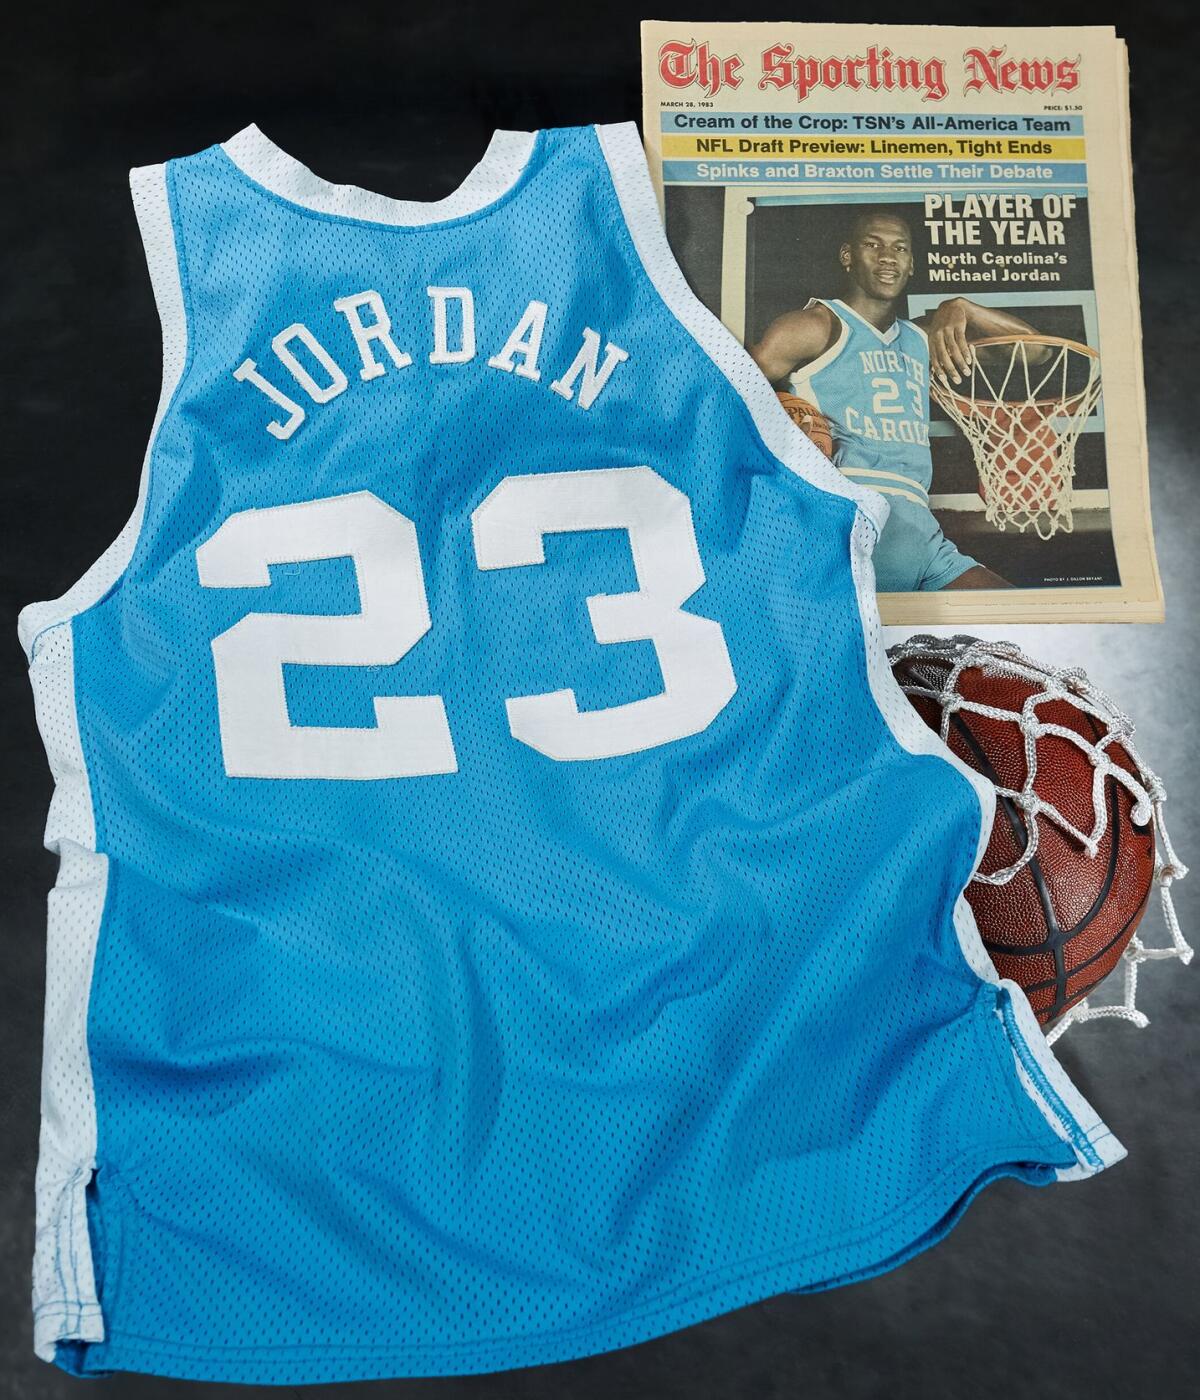 michael jordan jersey worn